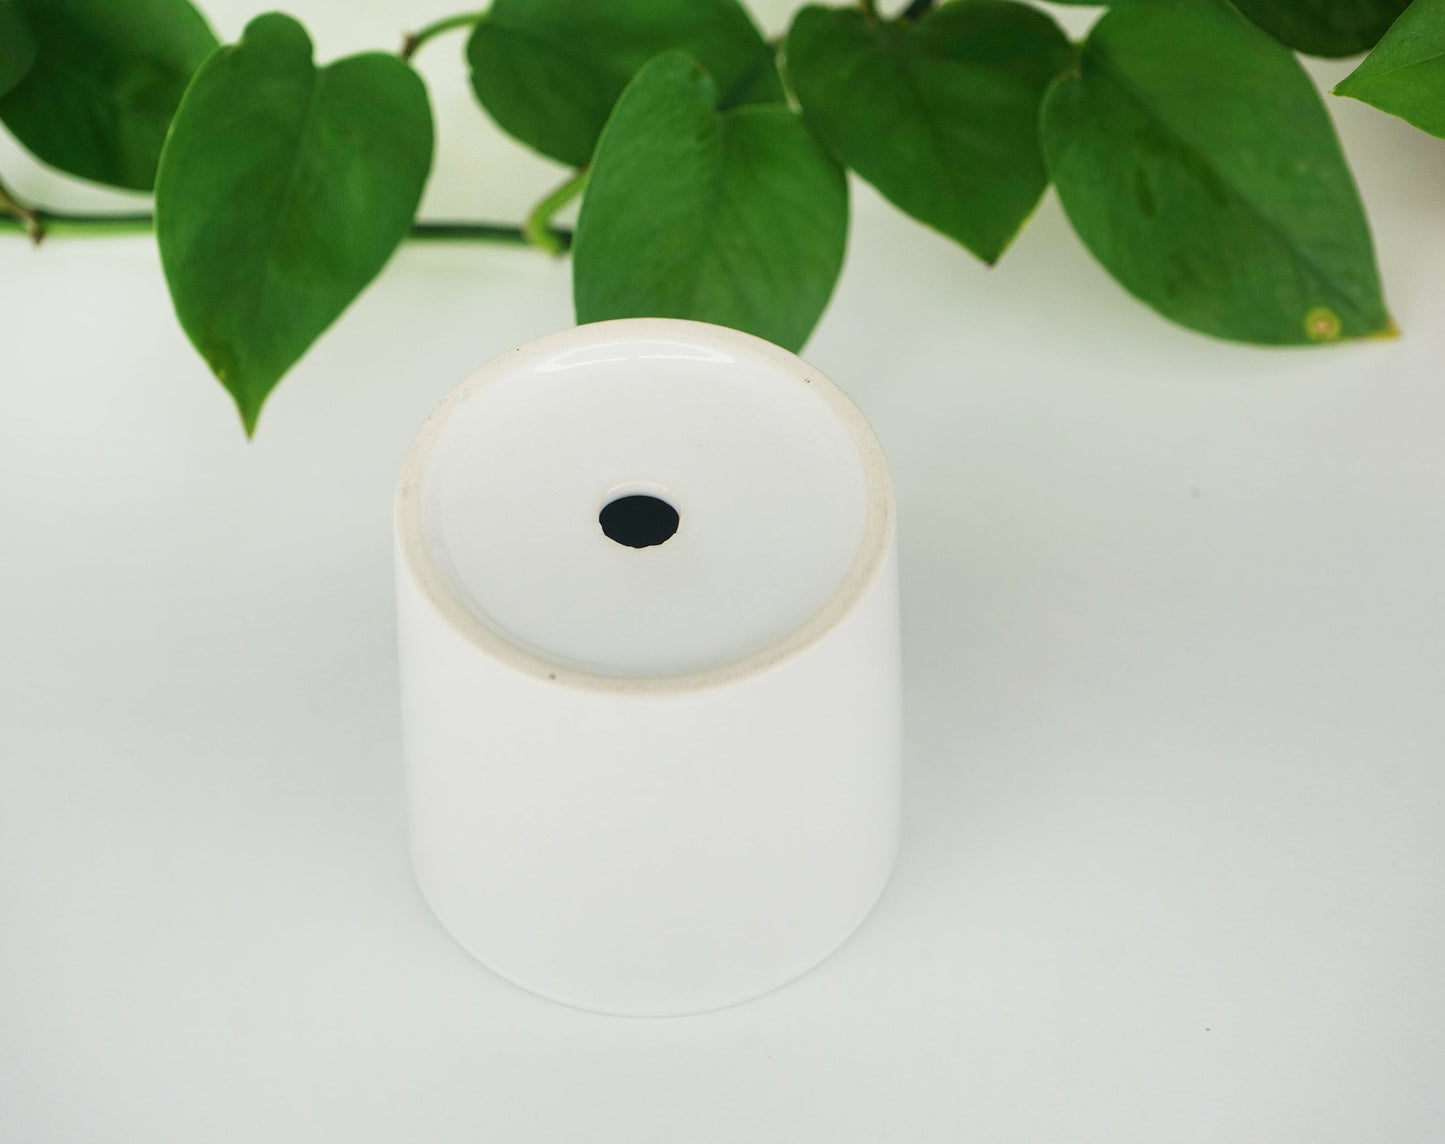 Personalized Planter Engagement Gift - 3" White Ceramic Pot w/ Bamboo Tray - Custom Succulent Pot - Newly Engaged Couple Gift